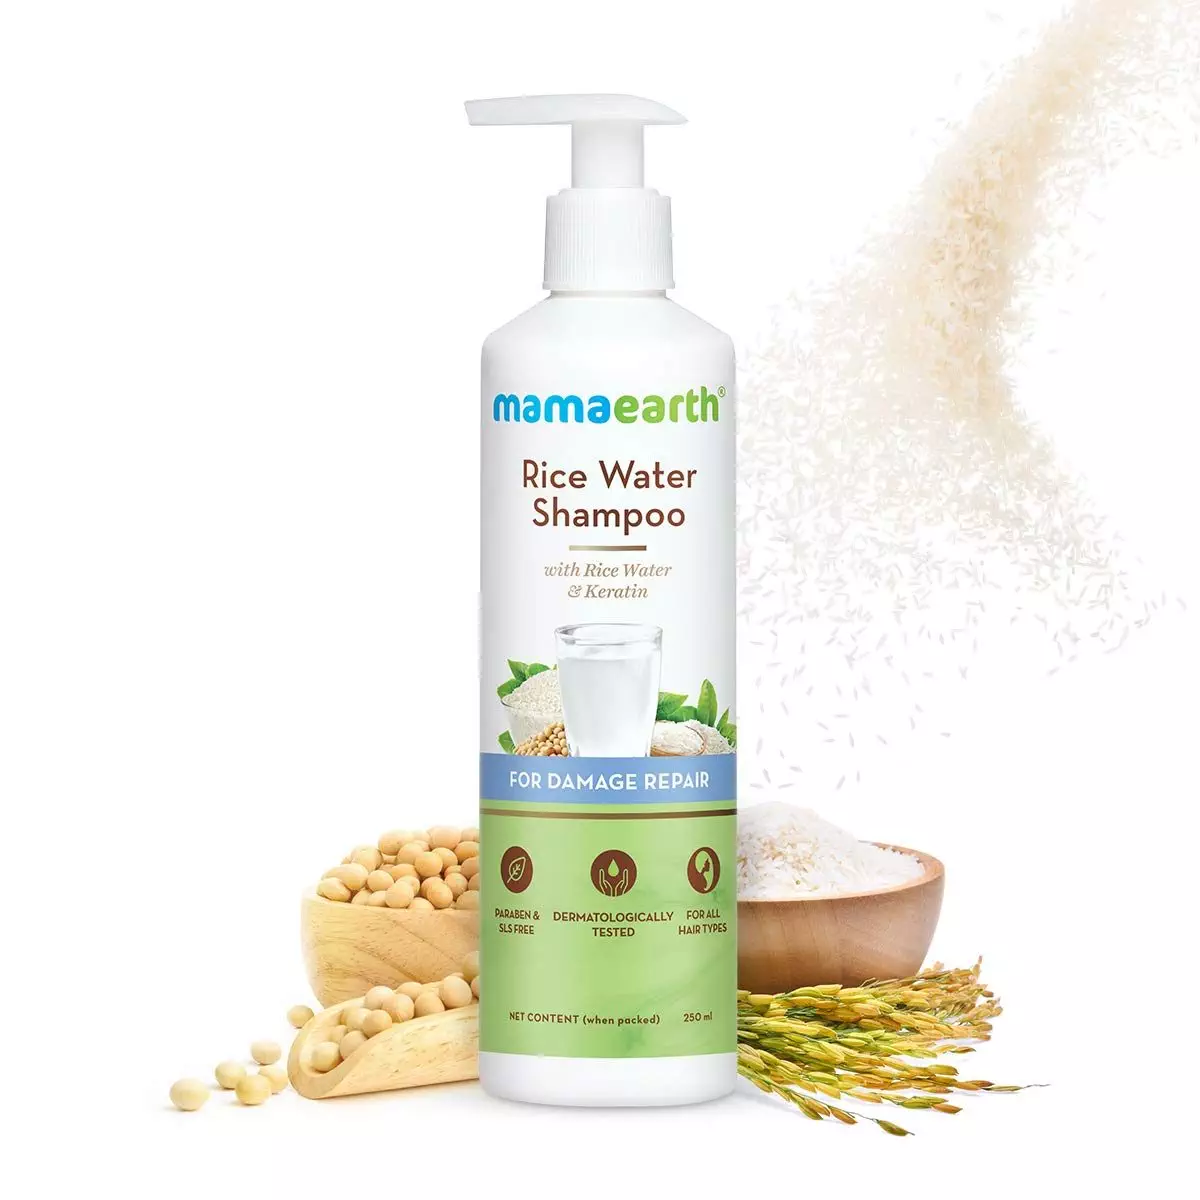 Mamaearth Rice Water Shampoo Review 15